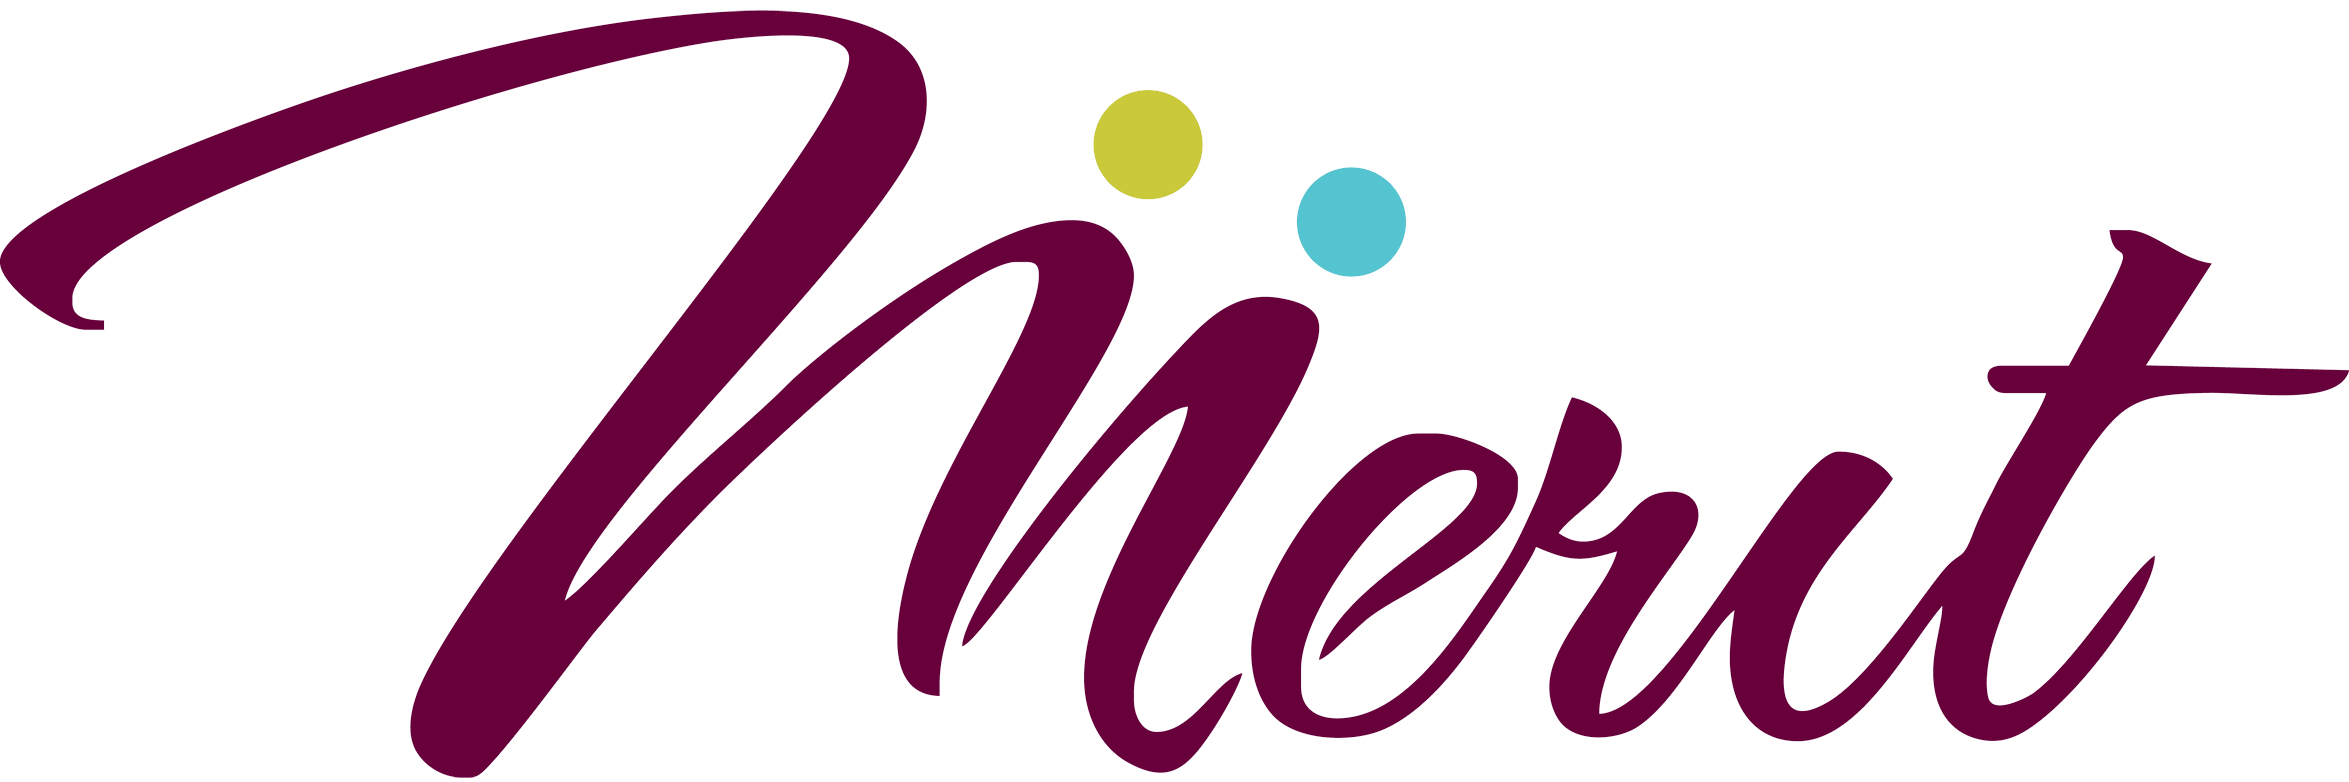 Merit Logo - Merit Group Competitors, Revenue and Employees Company Profile